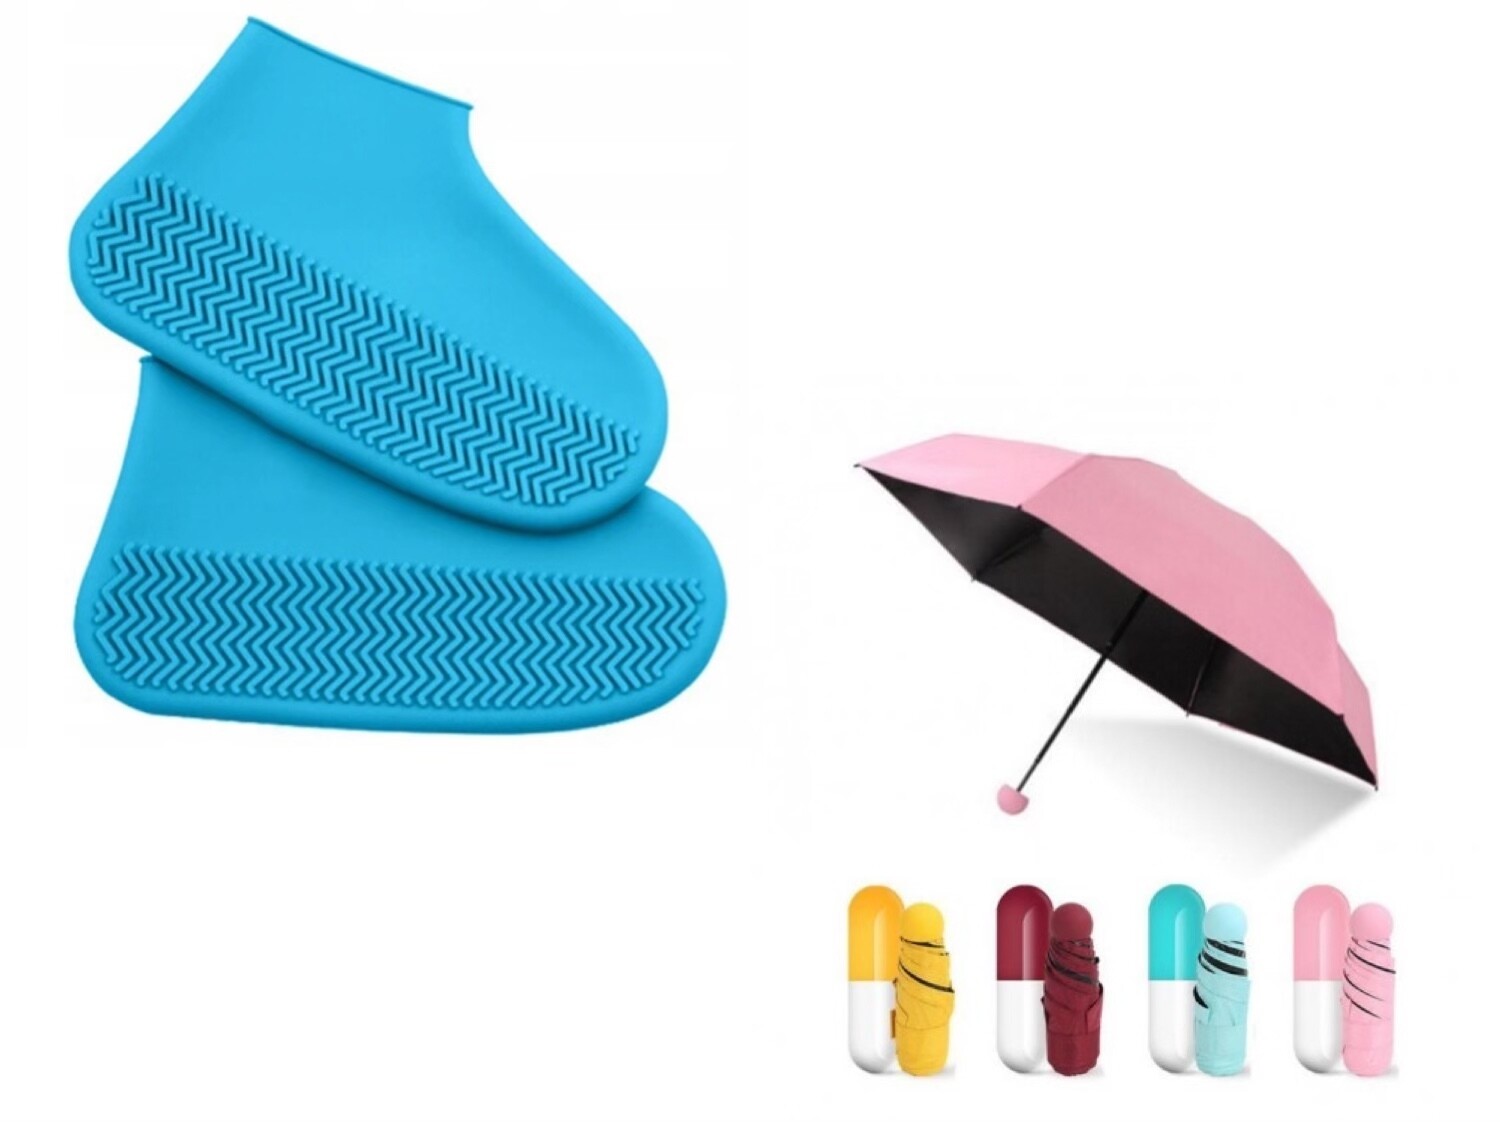 Silicone shoe cover case + Mini Umbrella - ფეხსაცმლის სილიკონის საწვიმარი + ქოლგა(კაფსულა)